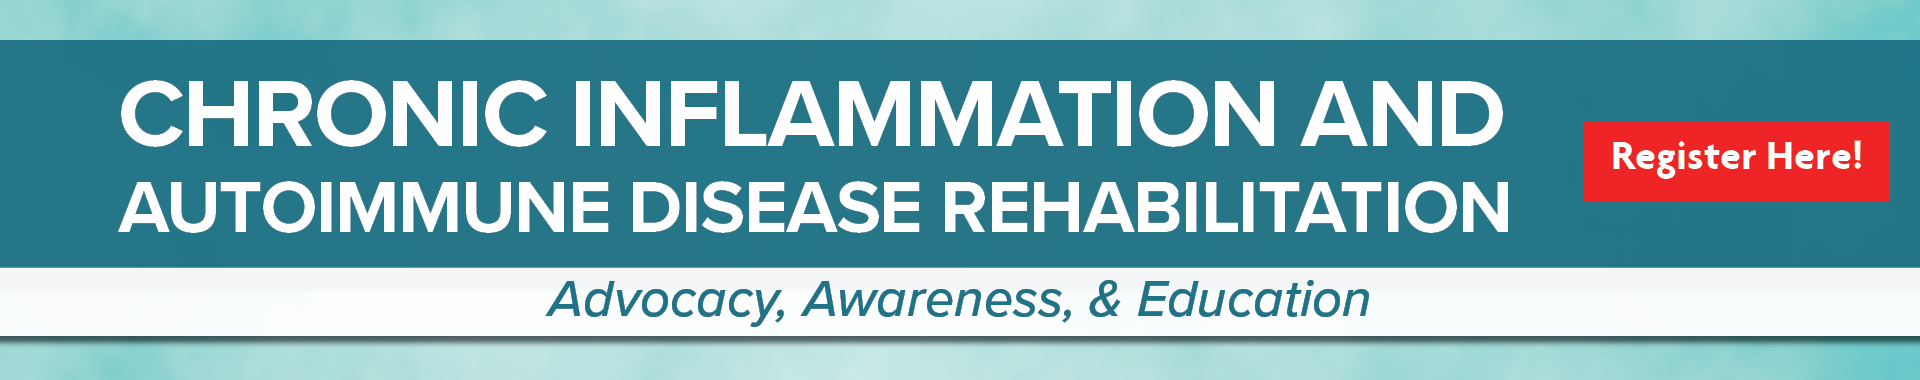 Chronic Inflammation and Autoimmune Disease Rehabilitation: Advocacy, Awareness, & Education